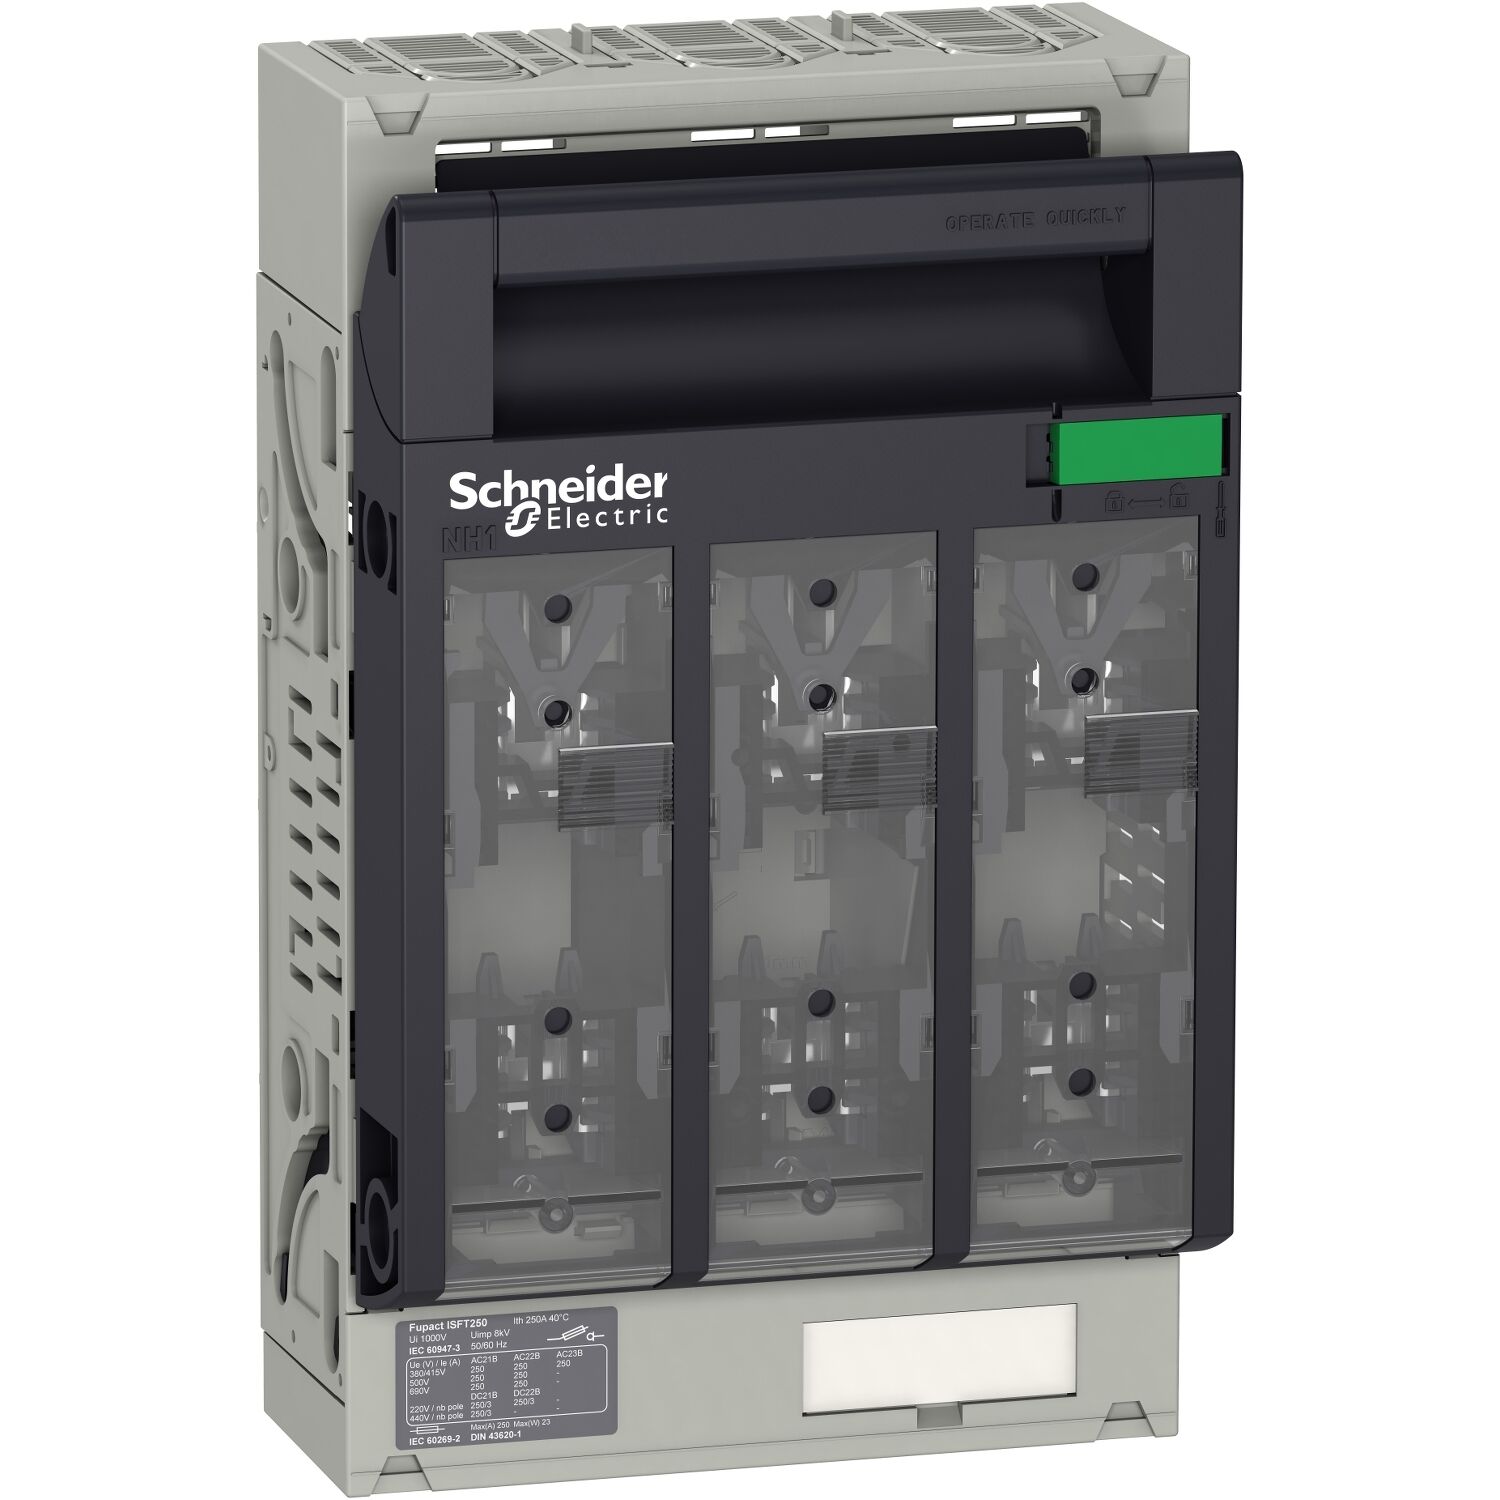 Schneider Electric LV480804 Sigortalı yük ayırıcı, FuPacT ISFT250, 250 A, DIN NH01, 3 kutuplu, arka plakaya montaj